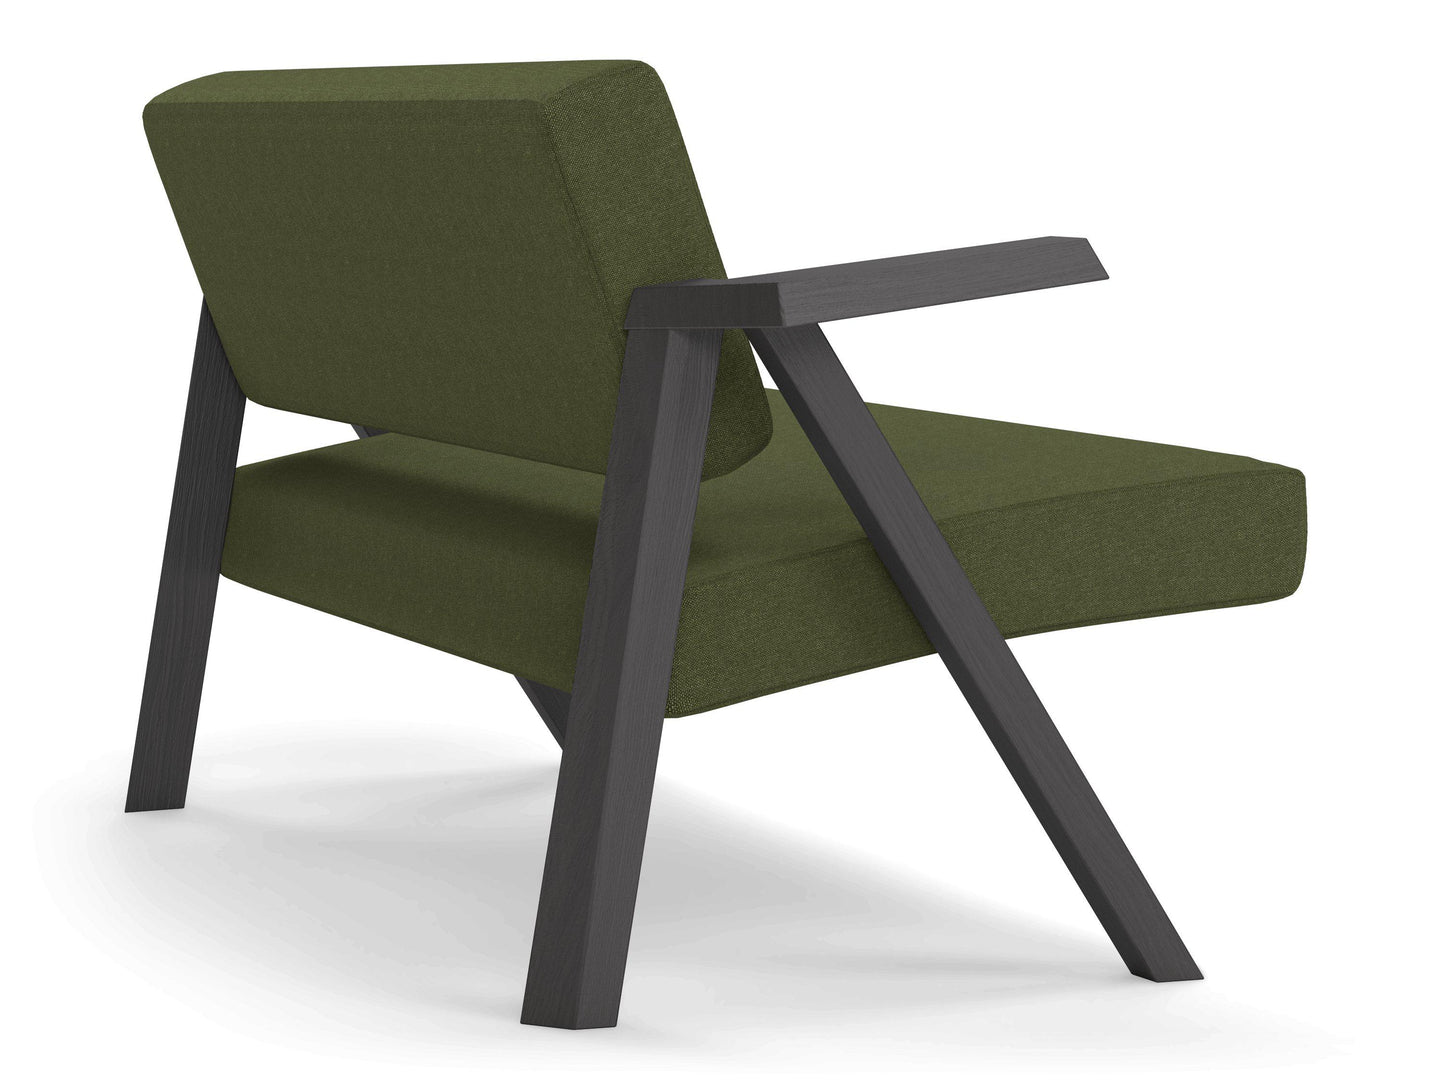 Classic Mid-century Design 2 Seater Sofa Armchair in Seaweed Green Fabric-Distinct Designs (London) Ltd